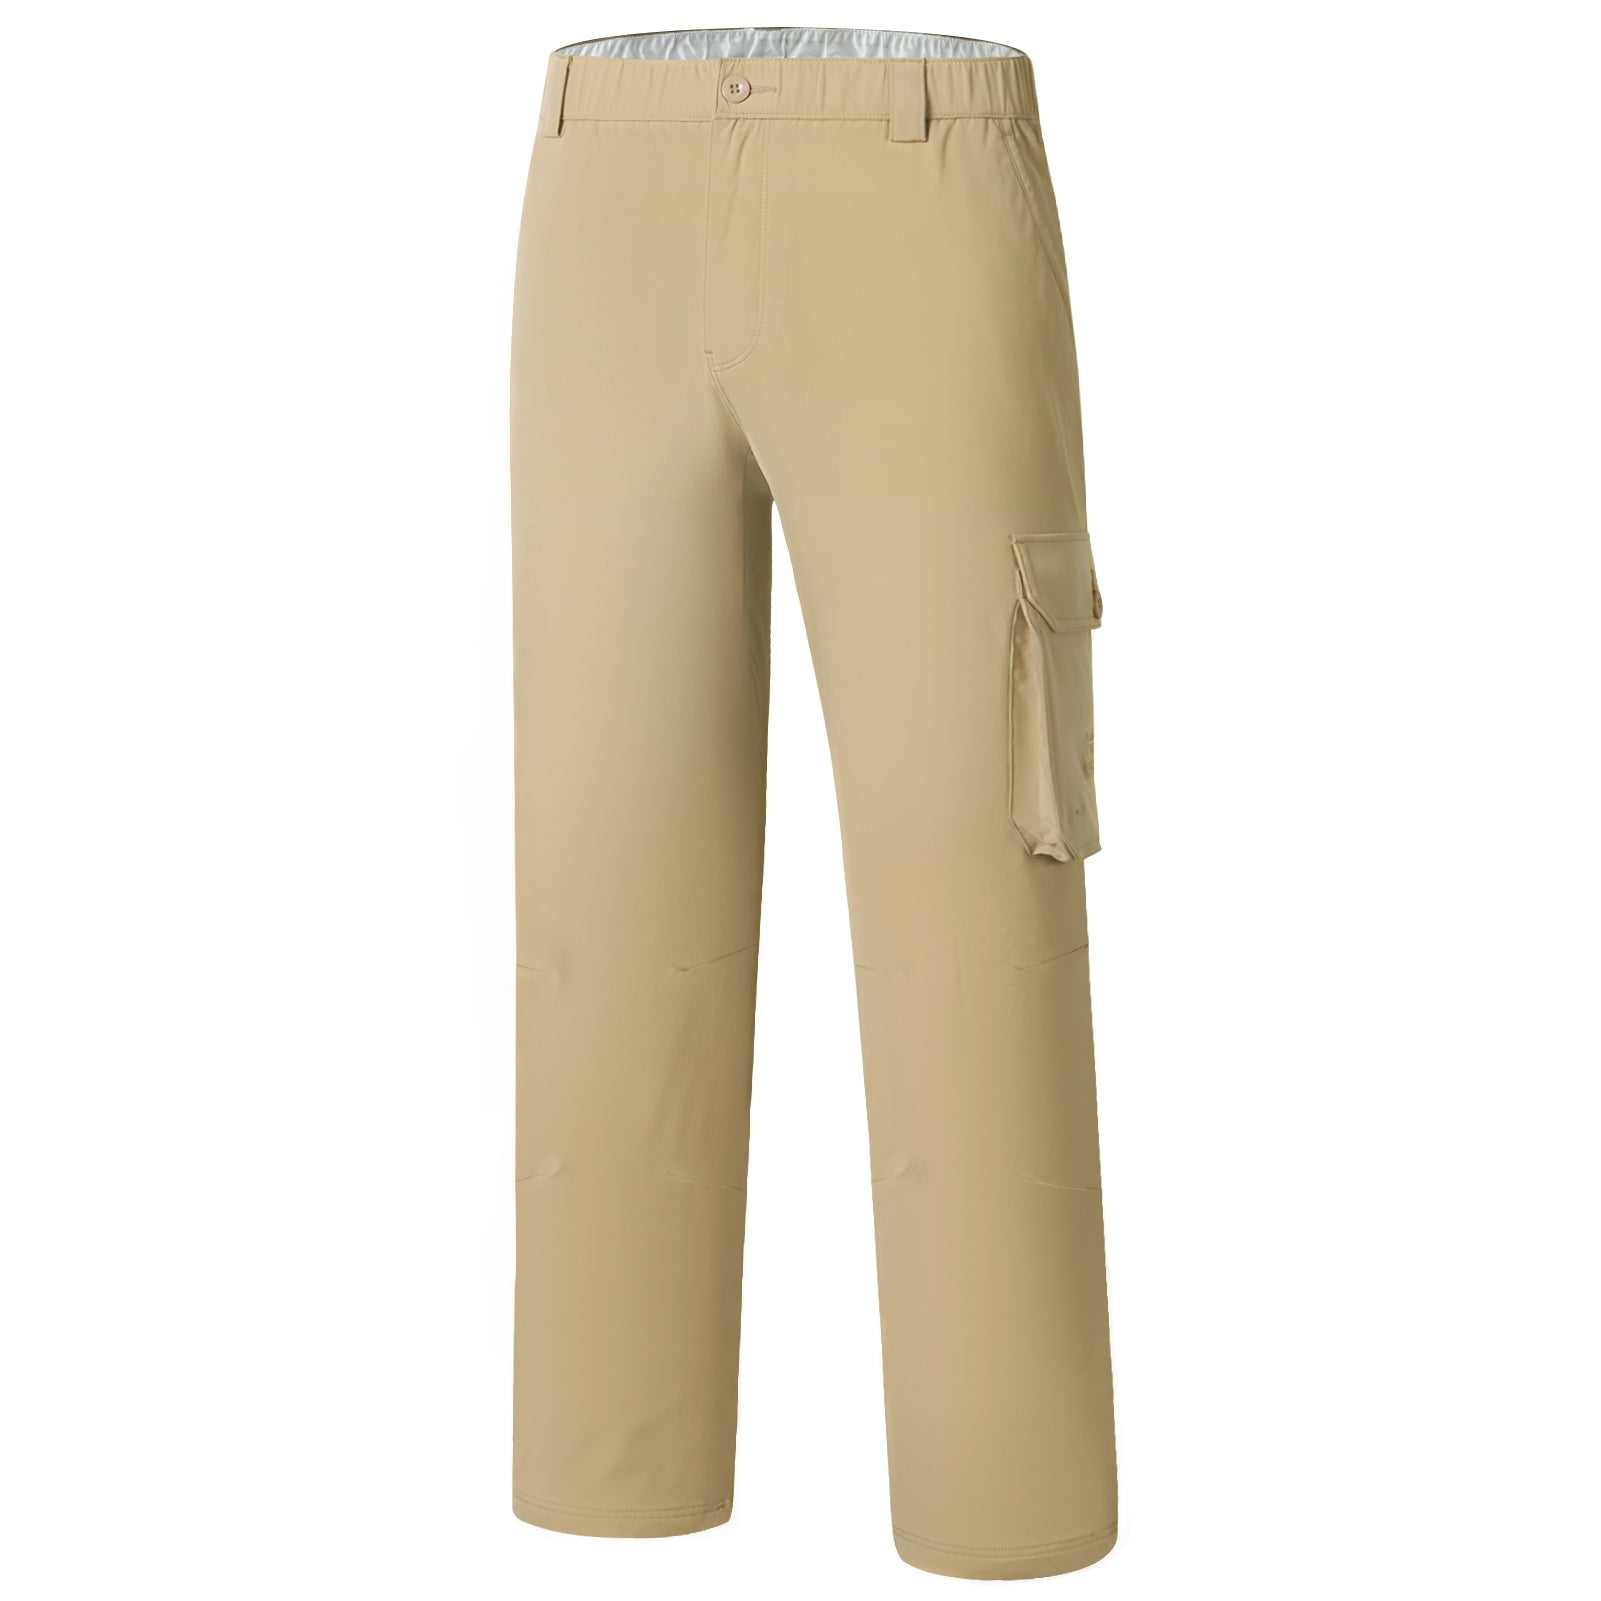 Bassdash Men’s Quick Dry Elastic Waist Fishing Pants FP05M, Khaki / Medium